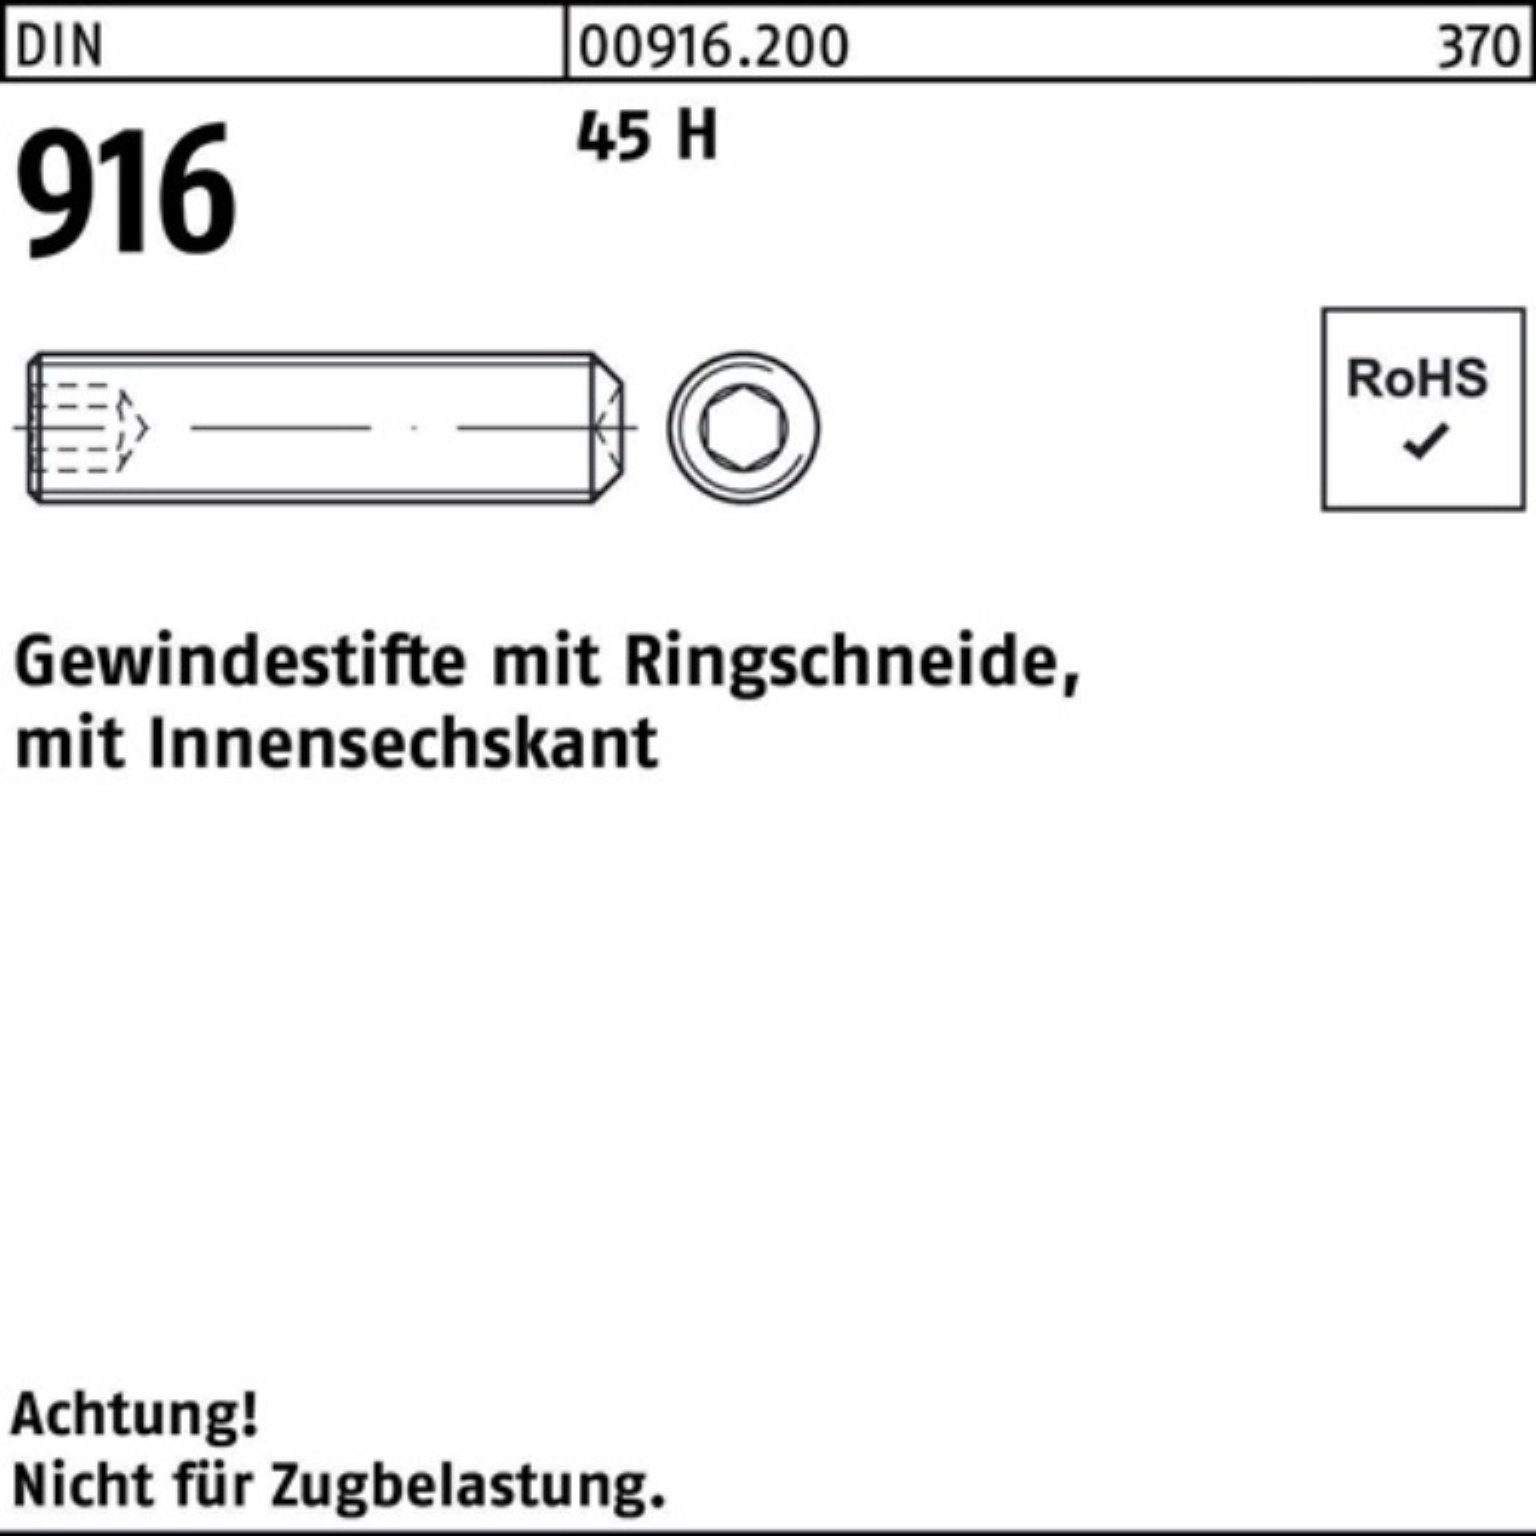 Reyher Gewindebolzen 100er Pack Gewindestift DIN 916 Ringschn./Innen-6kt M8x 55 45 H 100 St